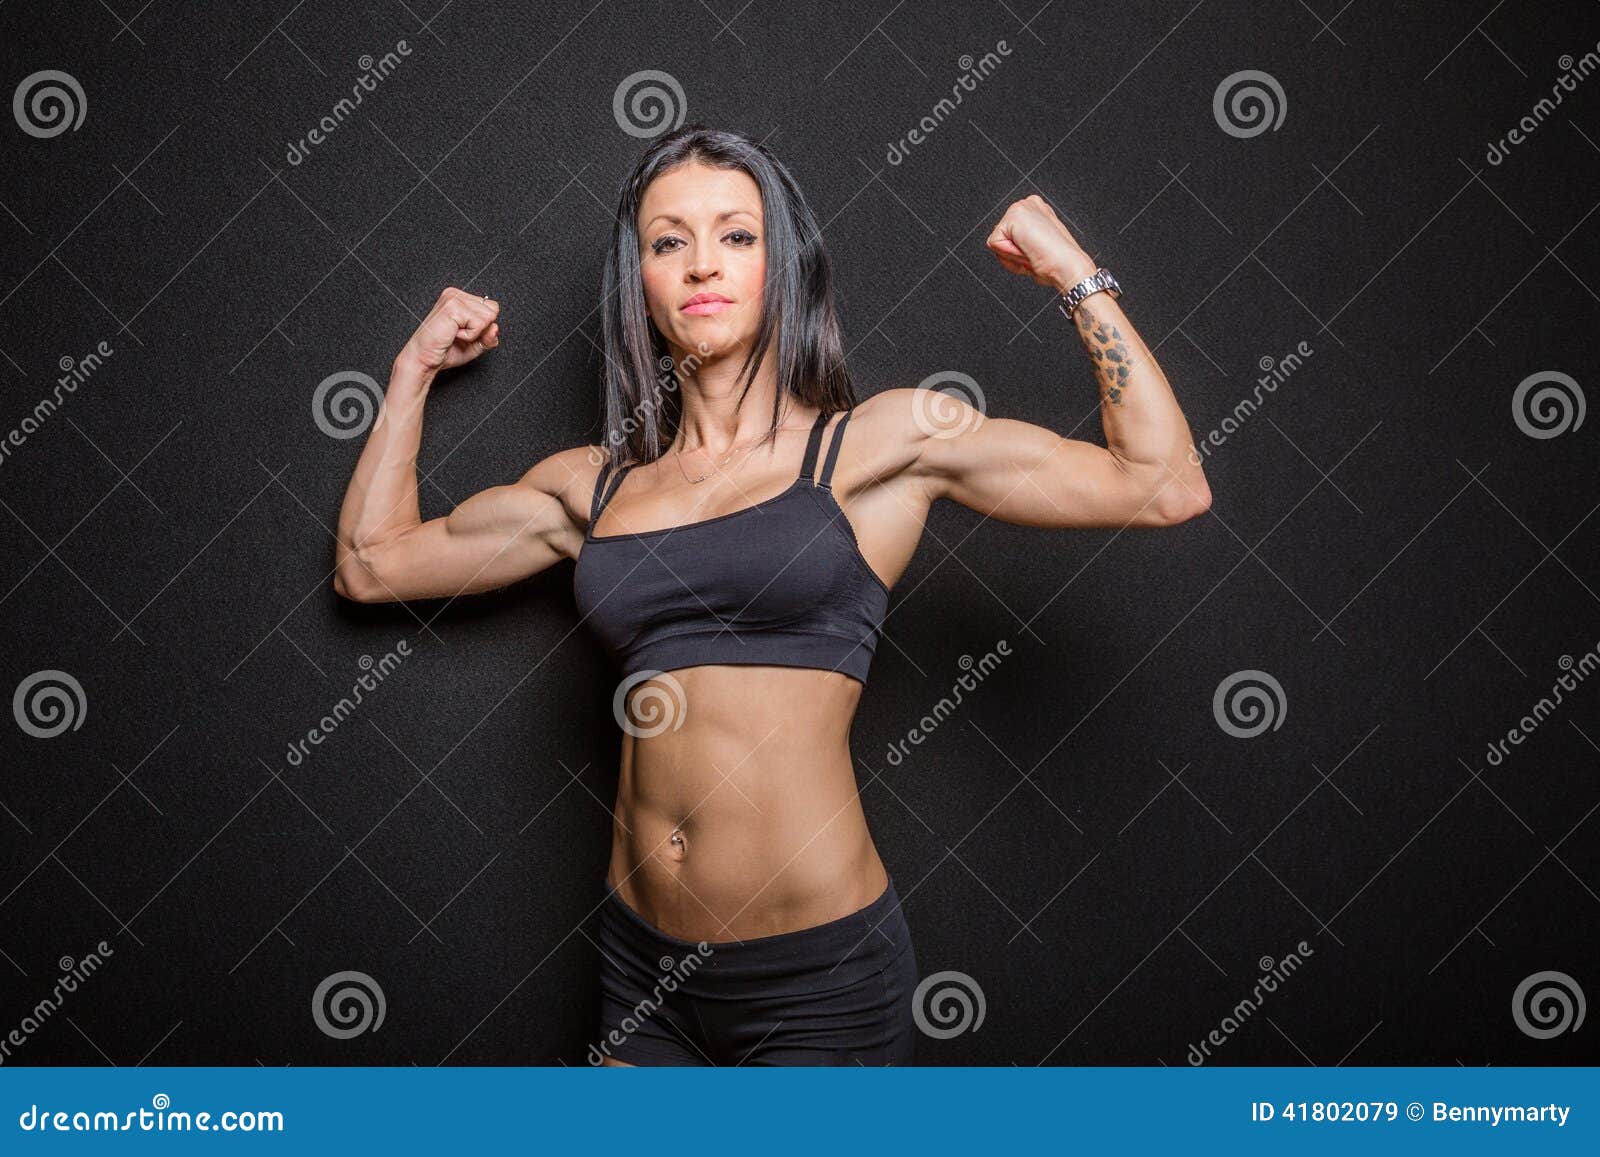 https://thumbs.dreamstime.com/z/female-bodybuilder-flexing-muscles-black-background-41802079.jpg